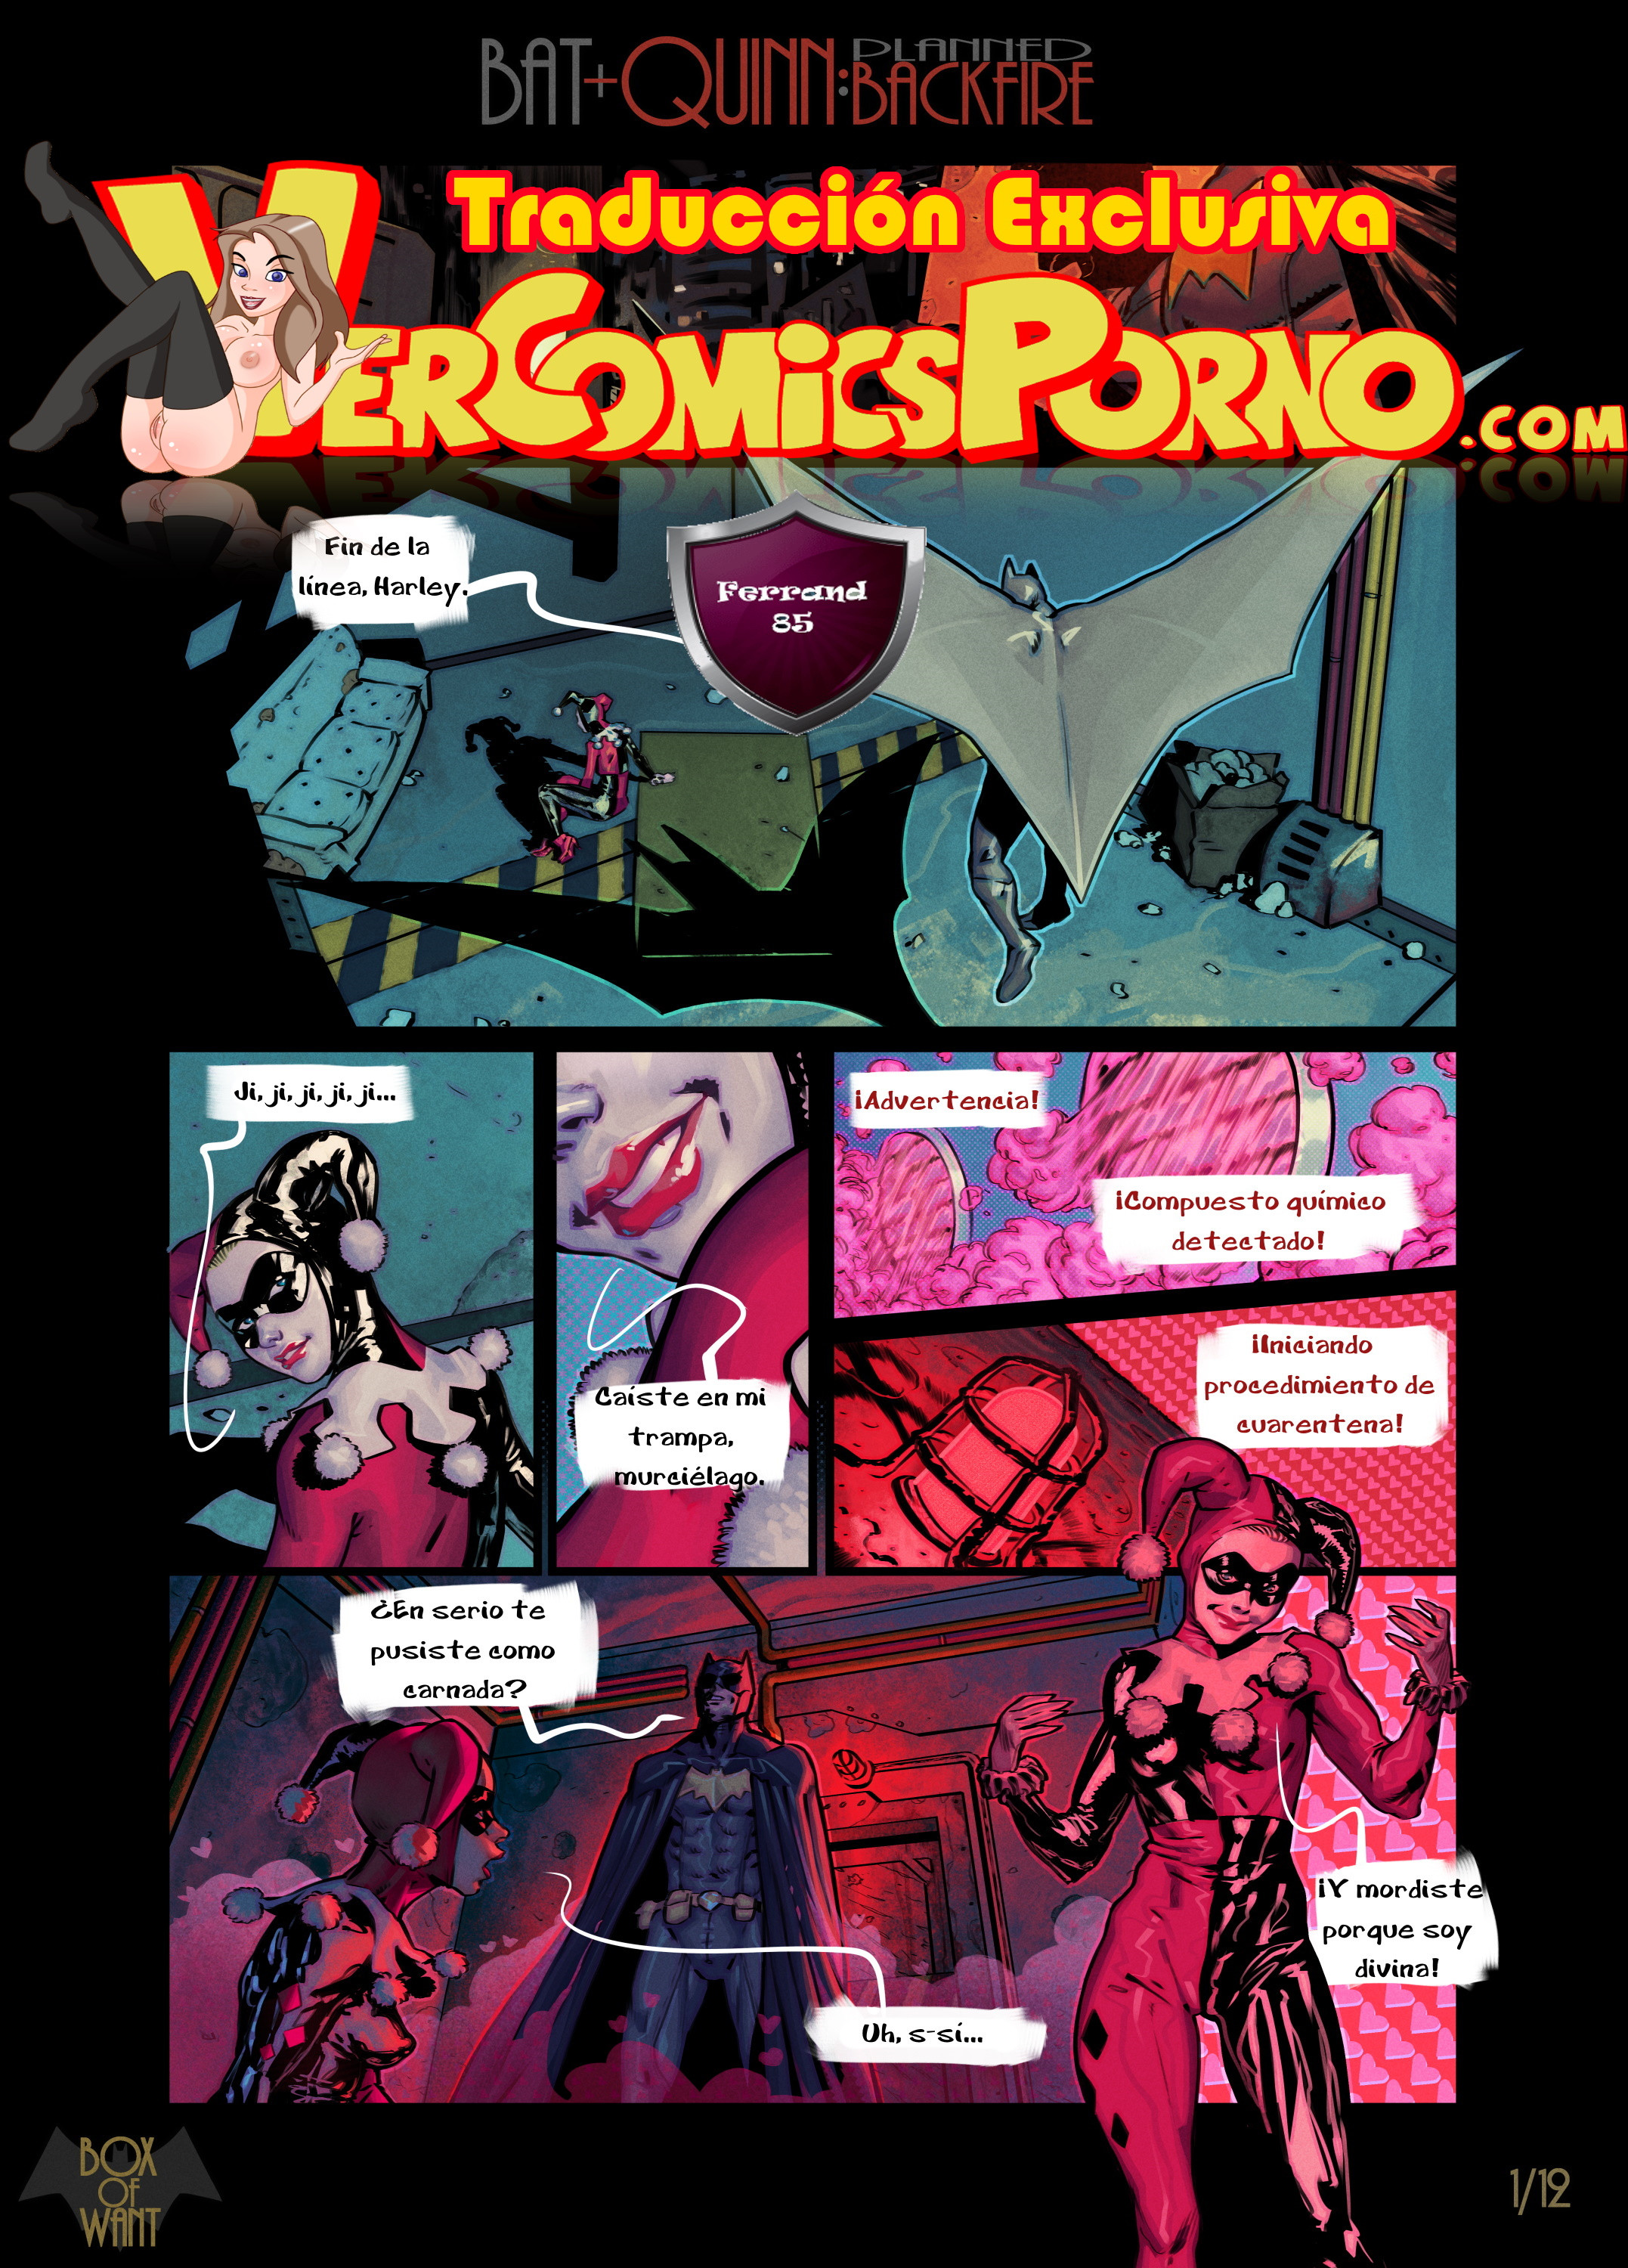 Batman And Harley Quinn Porn - Batman y Harley Quinn: Fantasias de una noche - Vercomicsporno